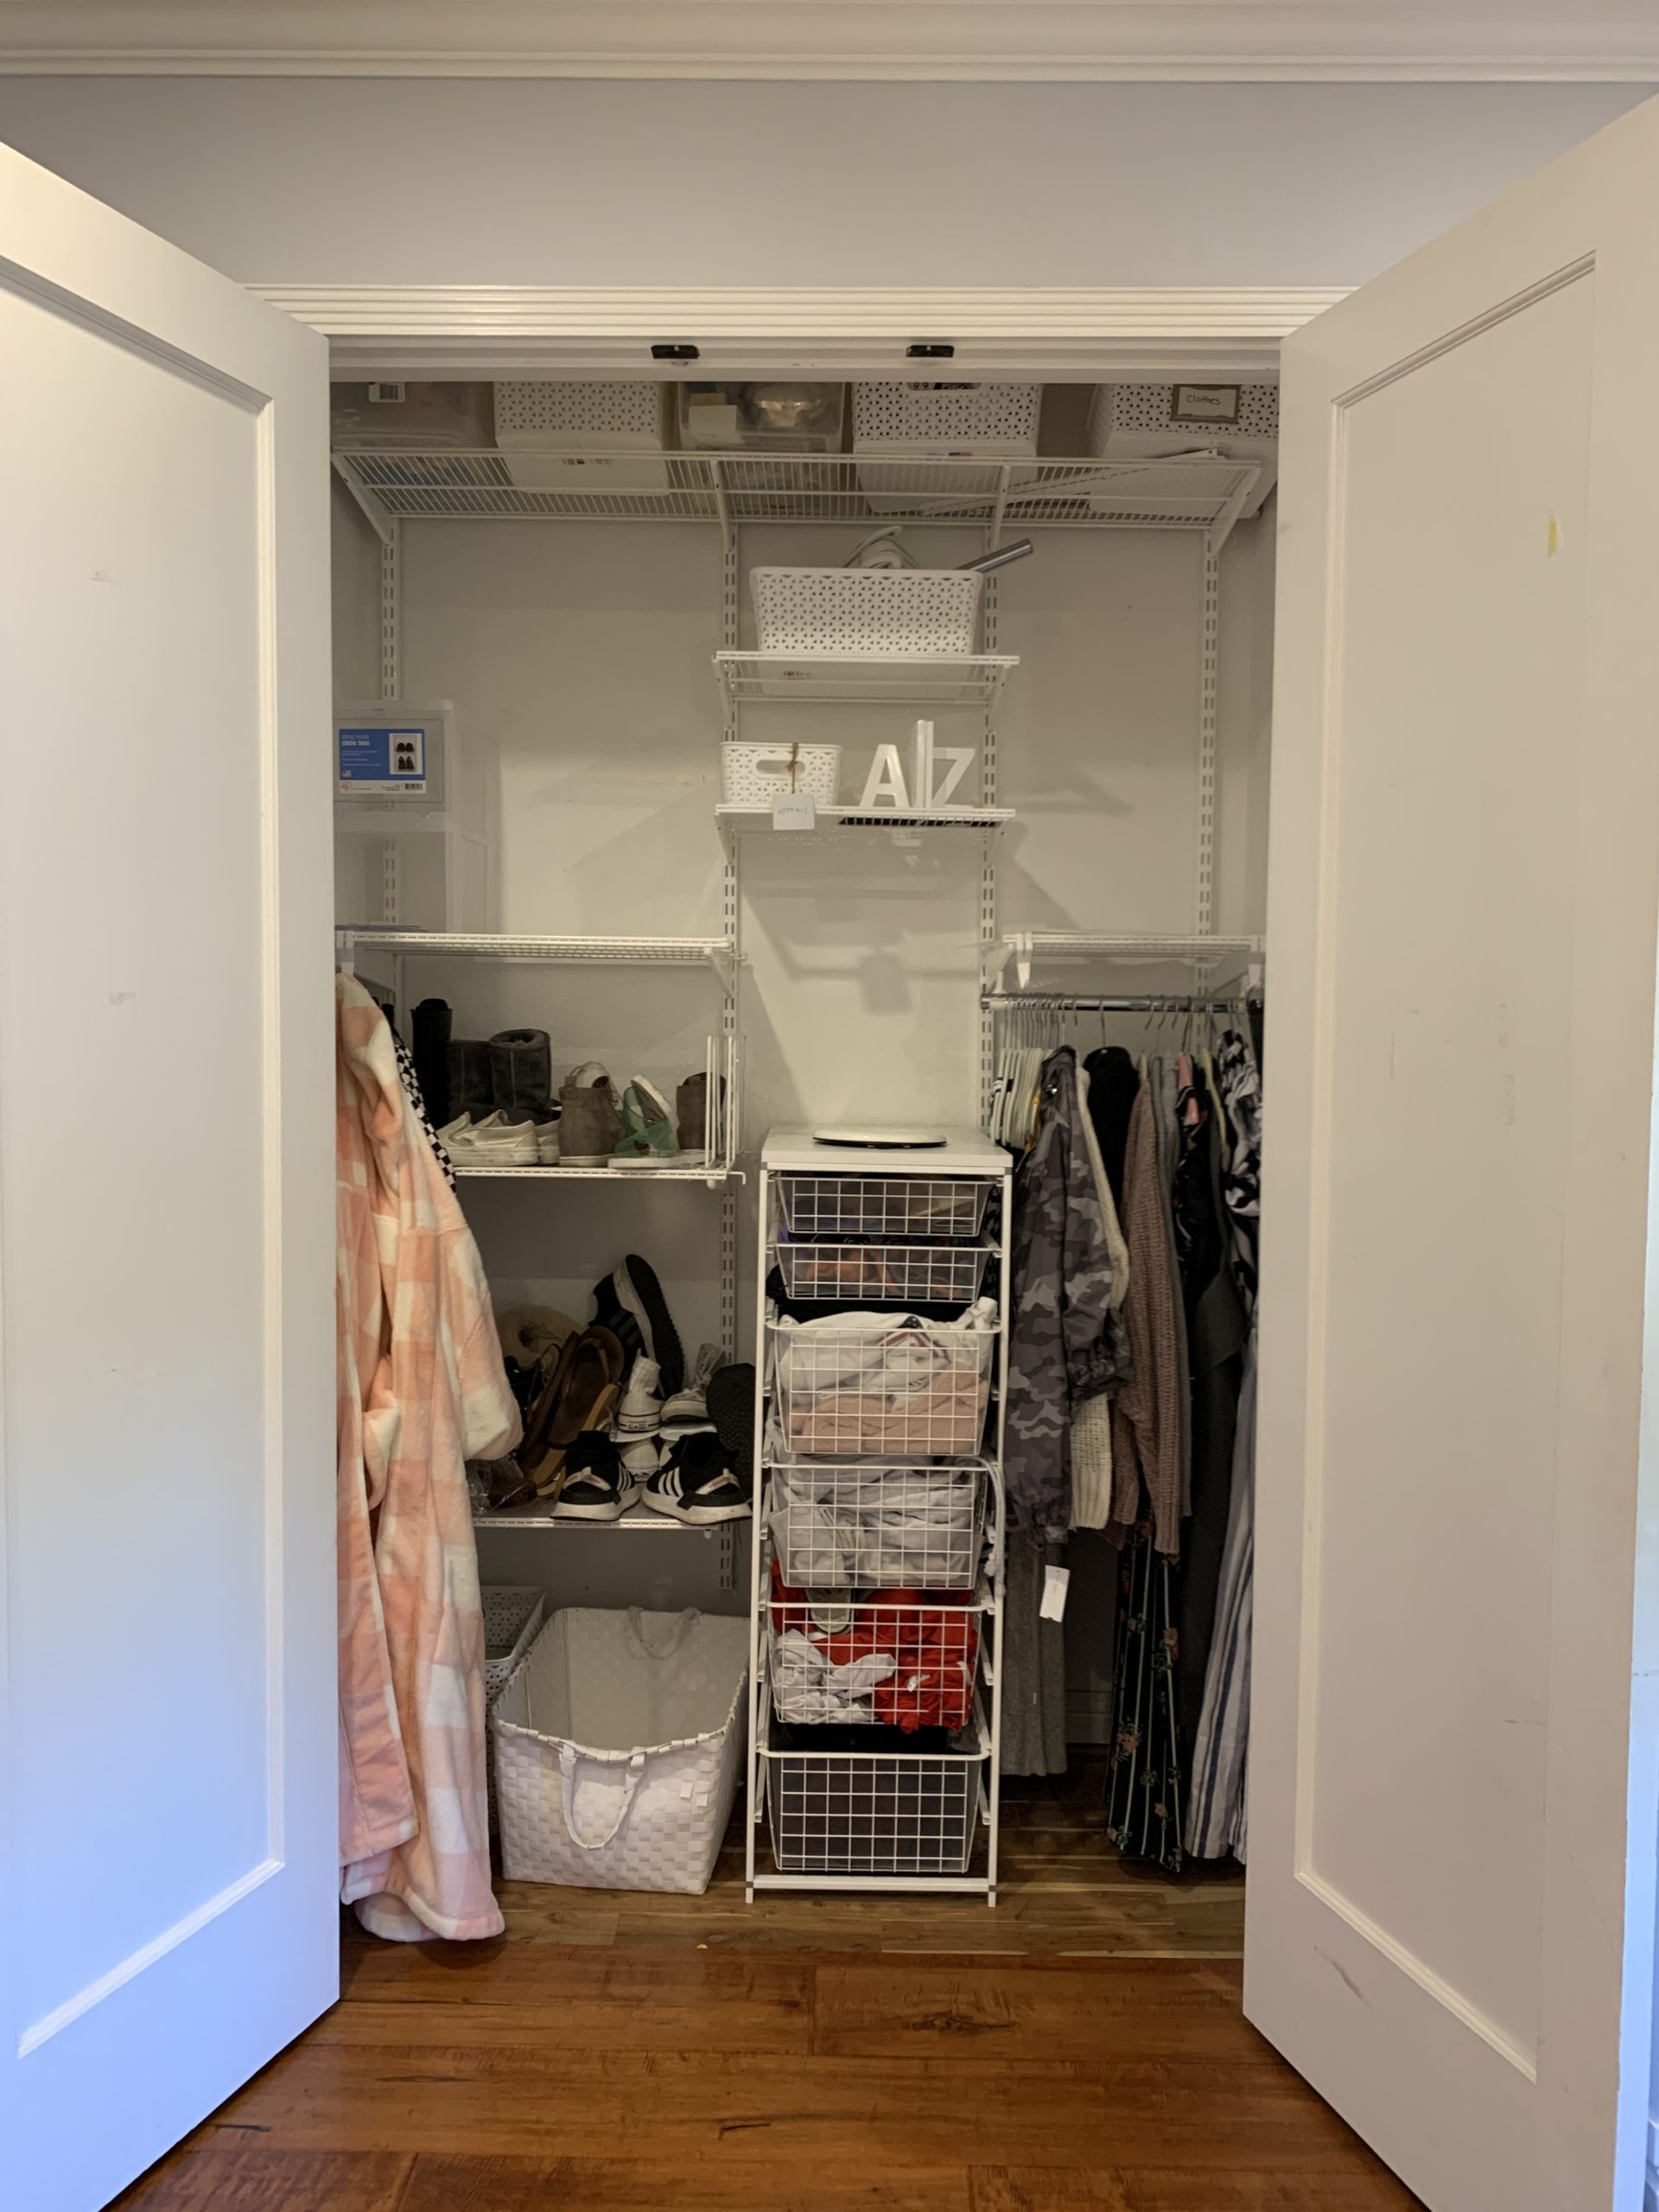 Our DIY Closet Remodel: The Elfa Closet System